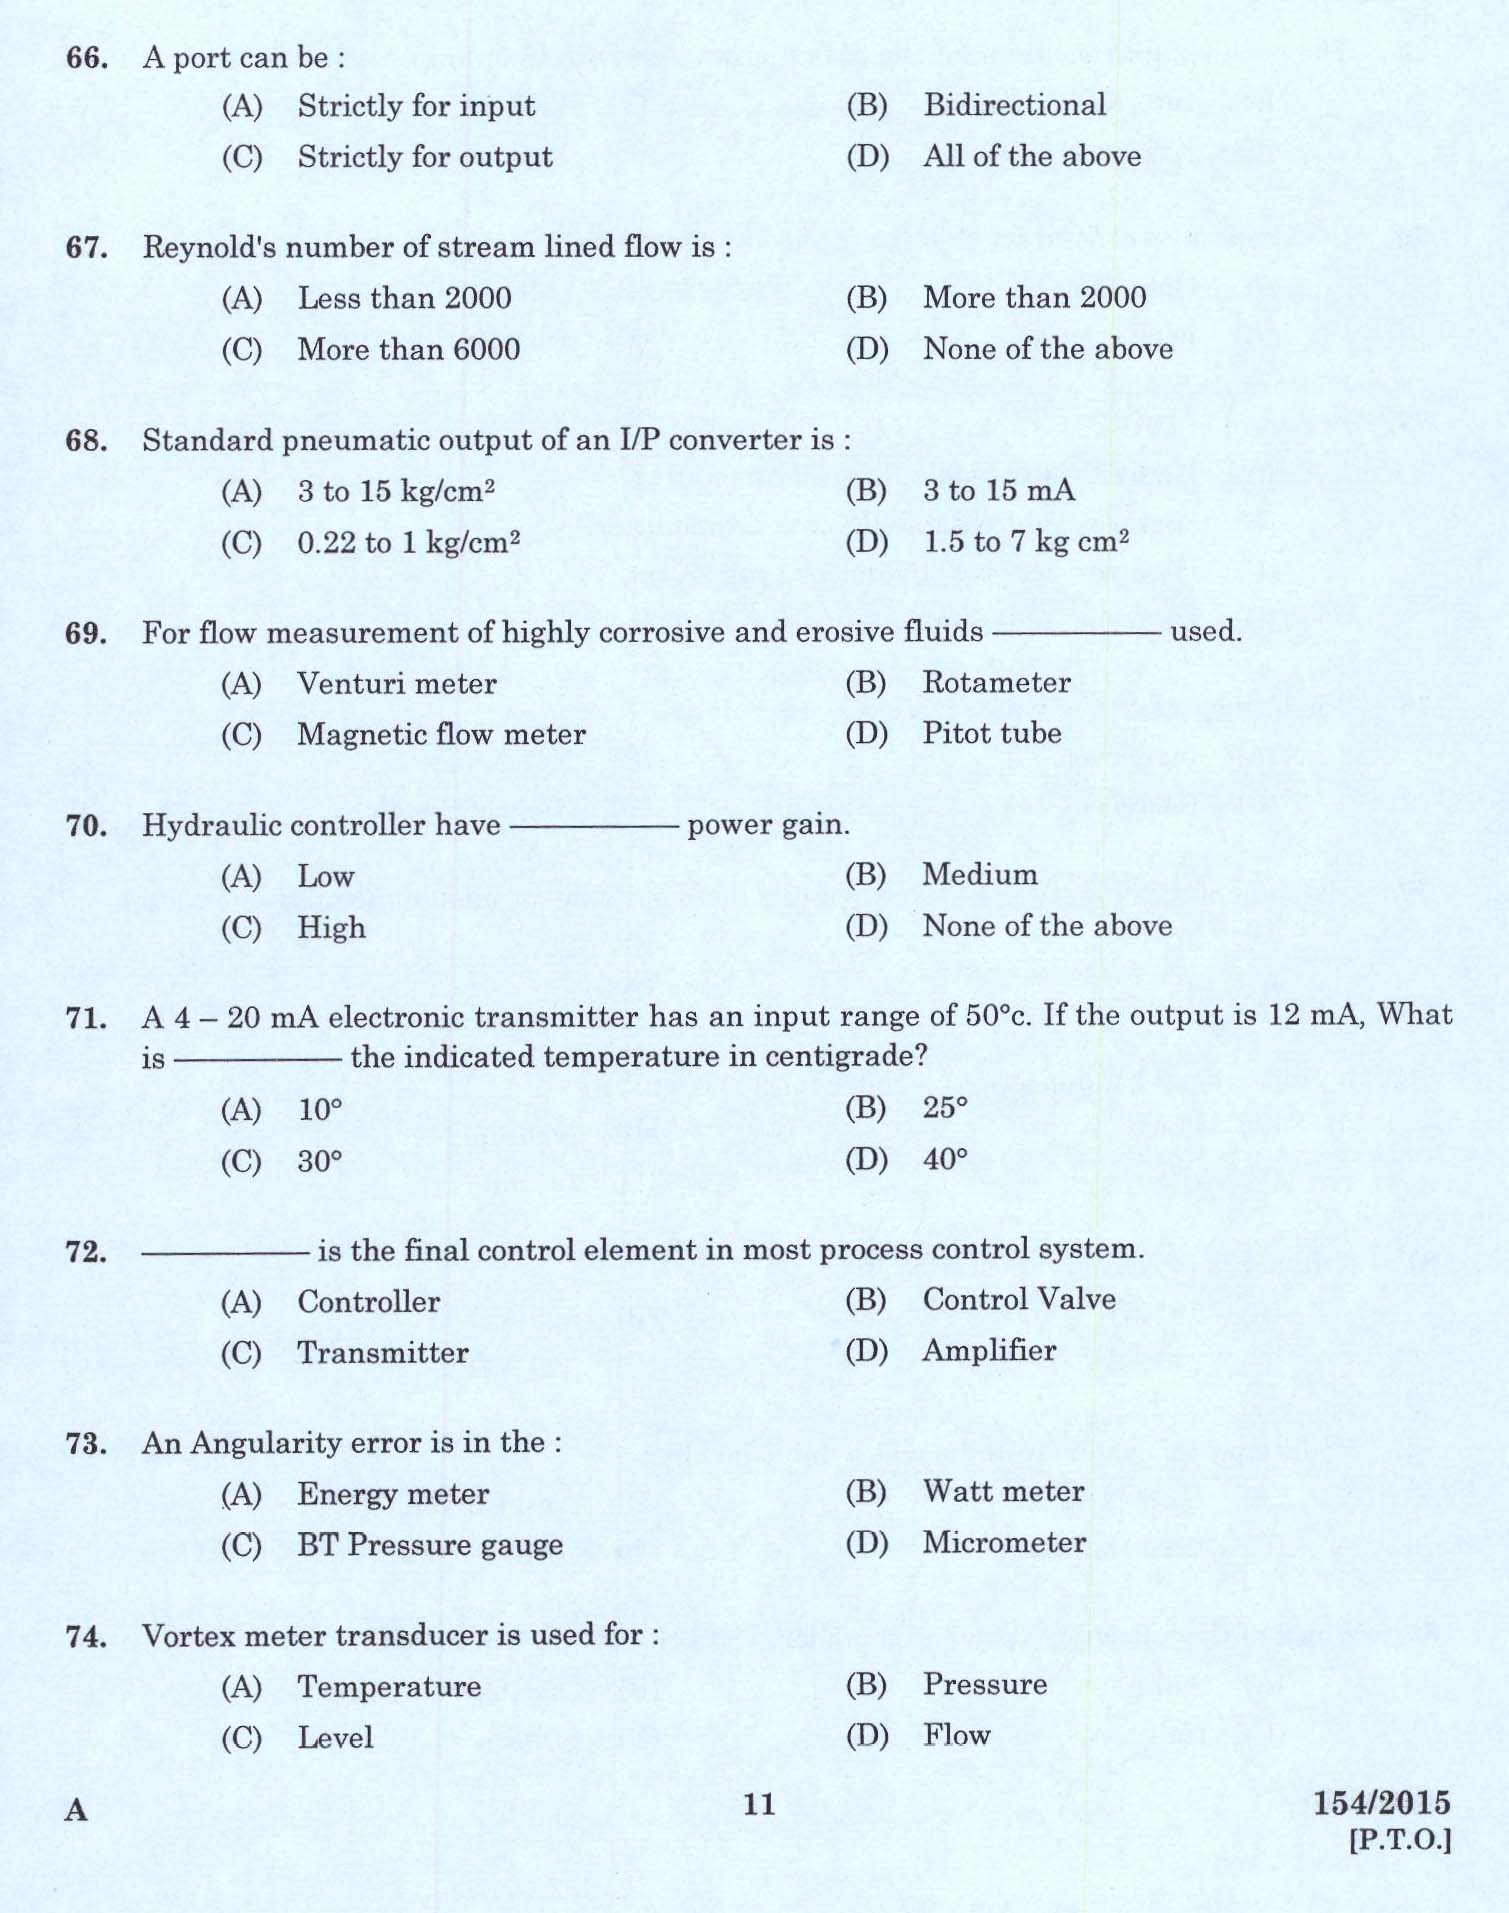 Kerala PSC Foreman Exam 2015 Question Paper Code 1542015 9